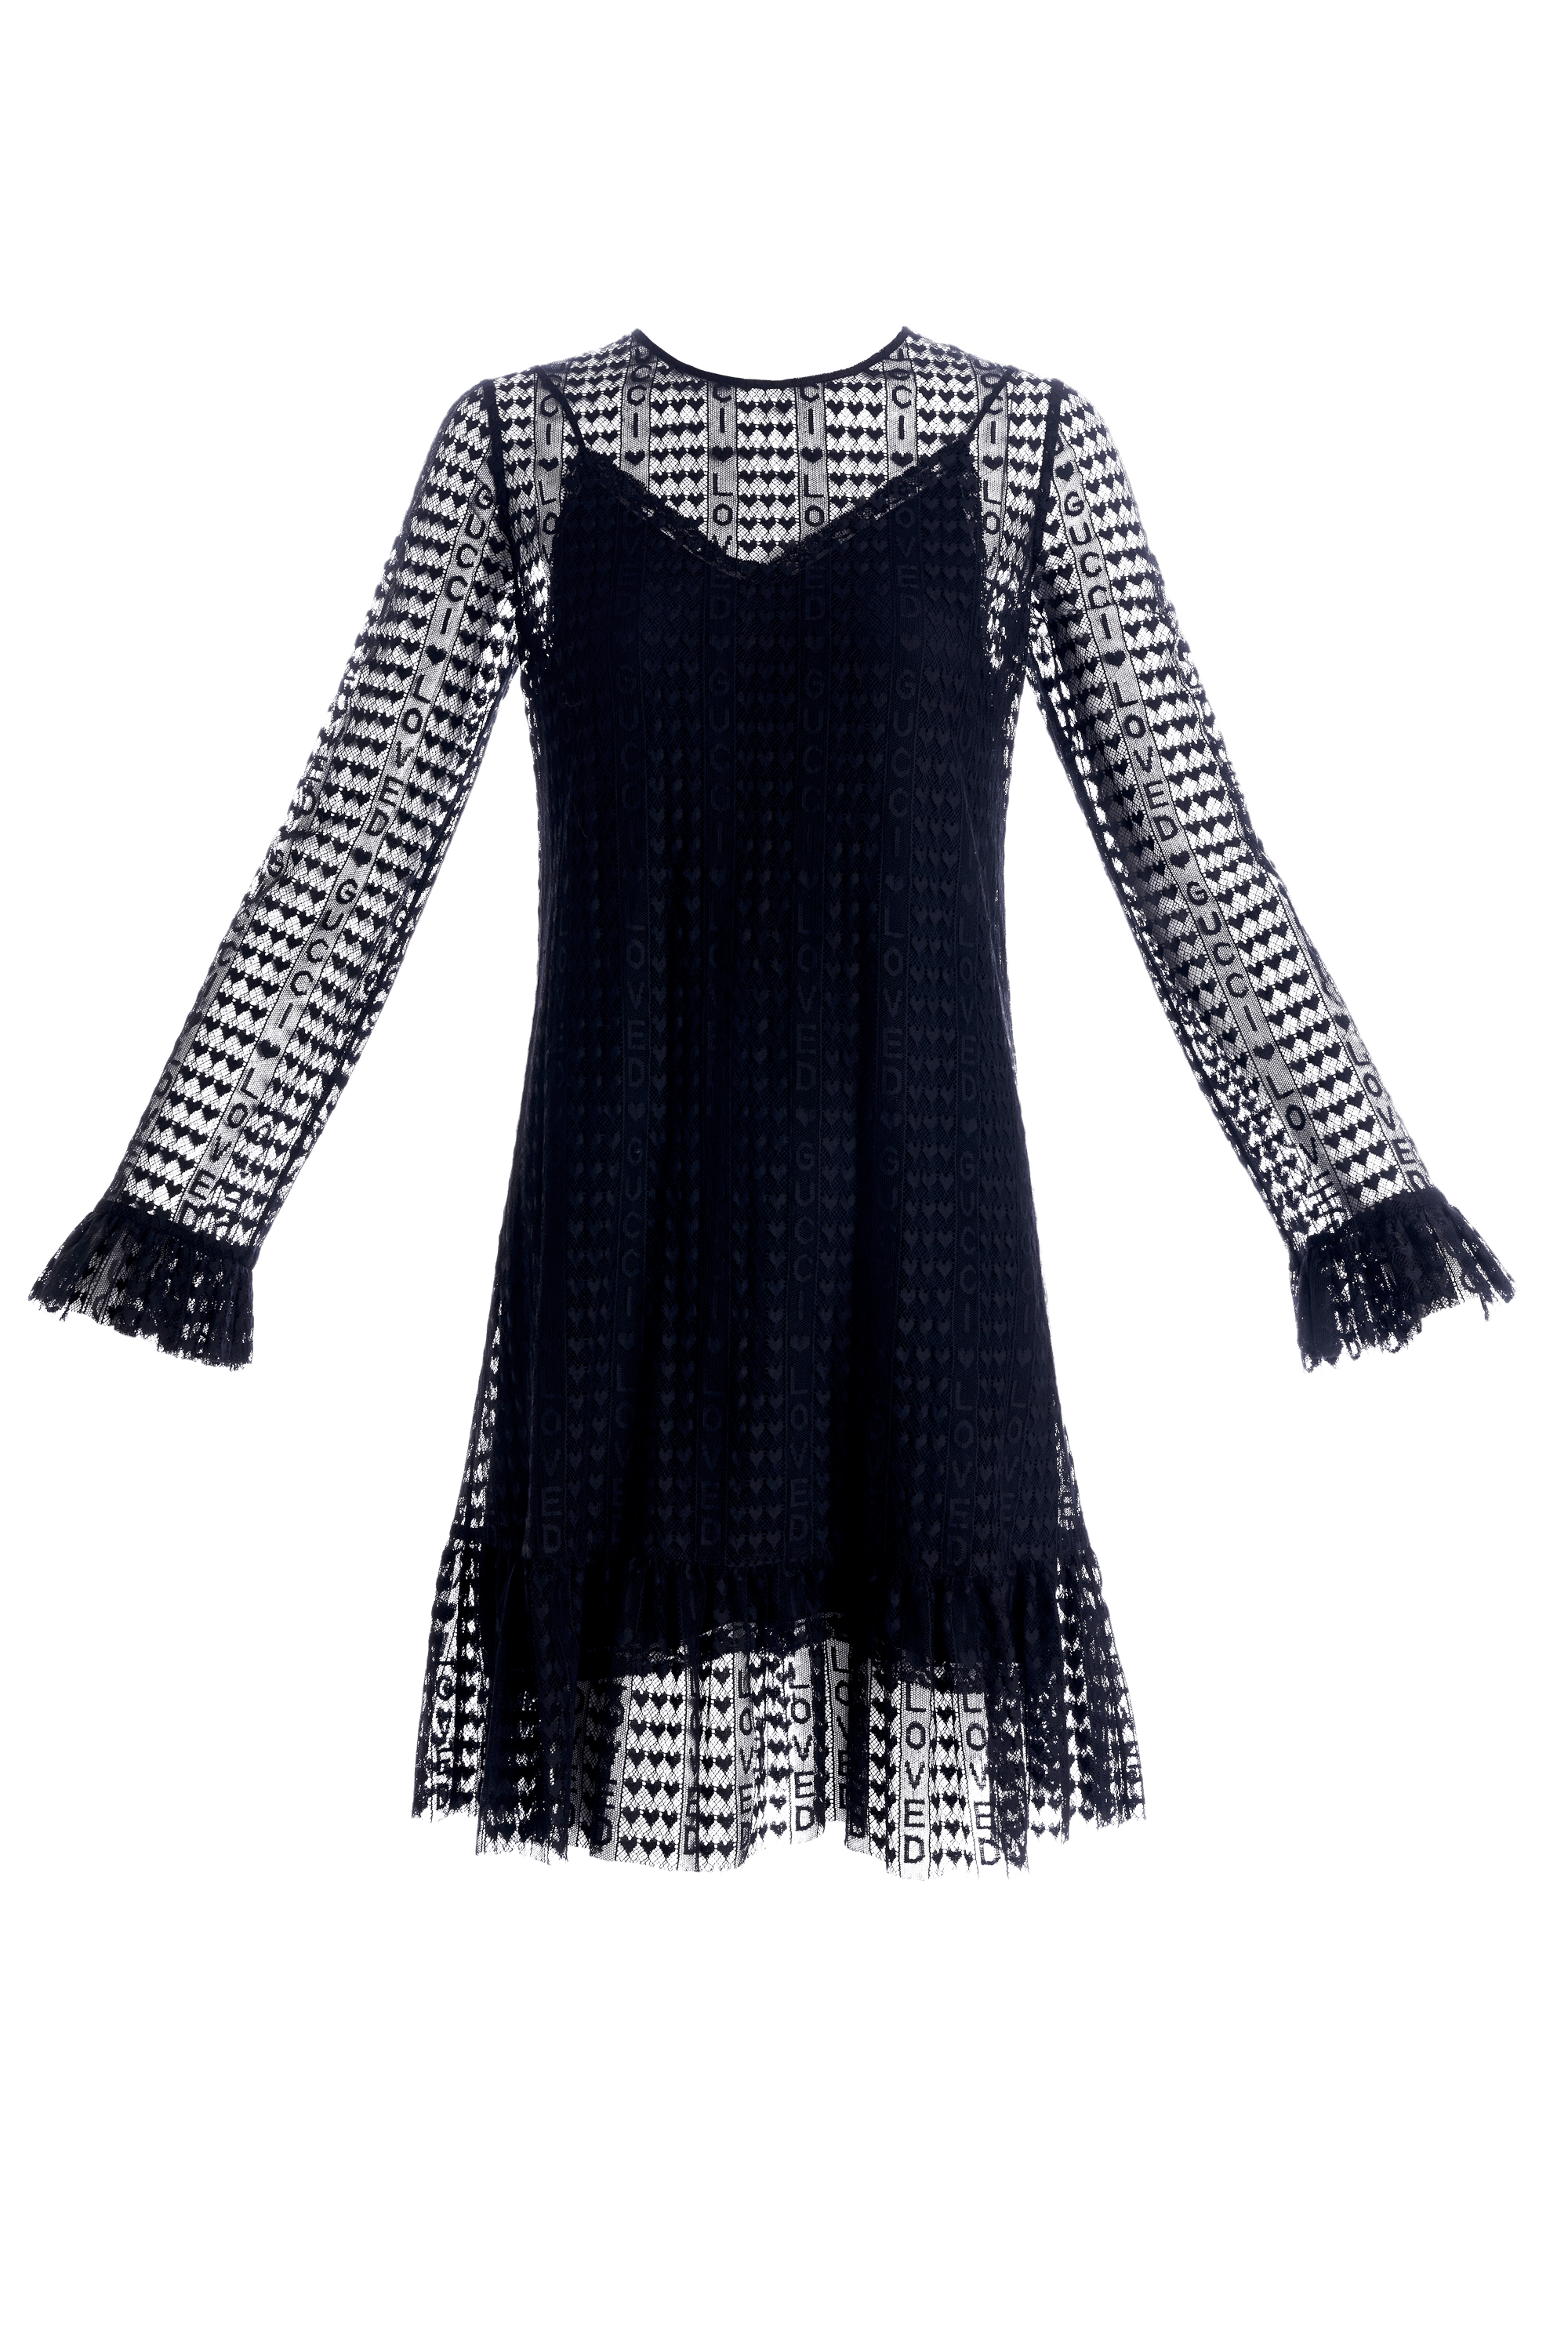 Gucci Loved Black Lace Dress Size 38